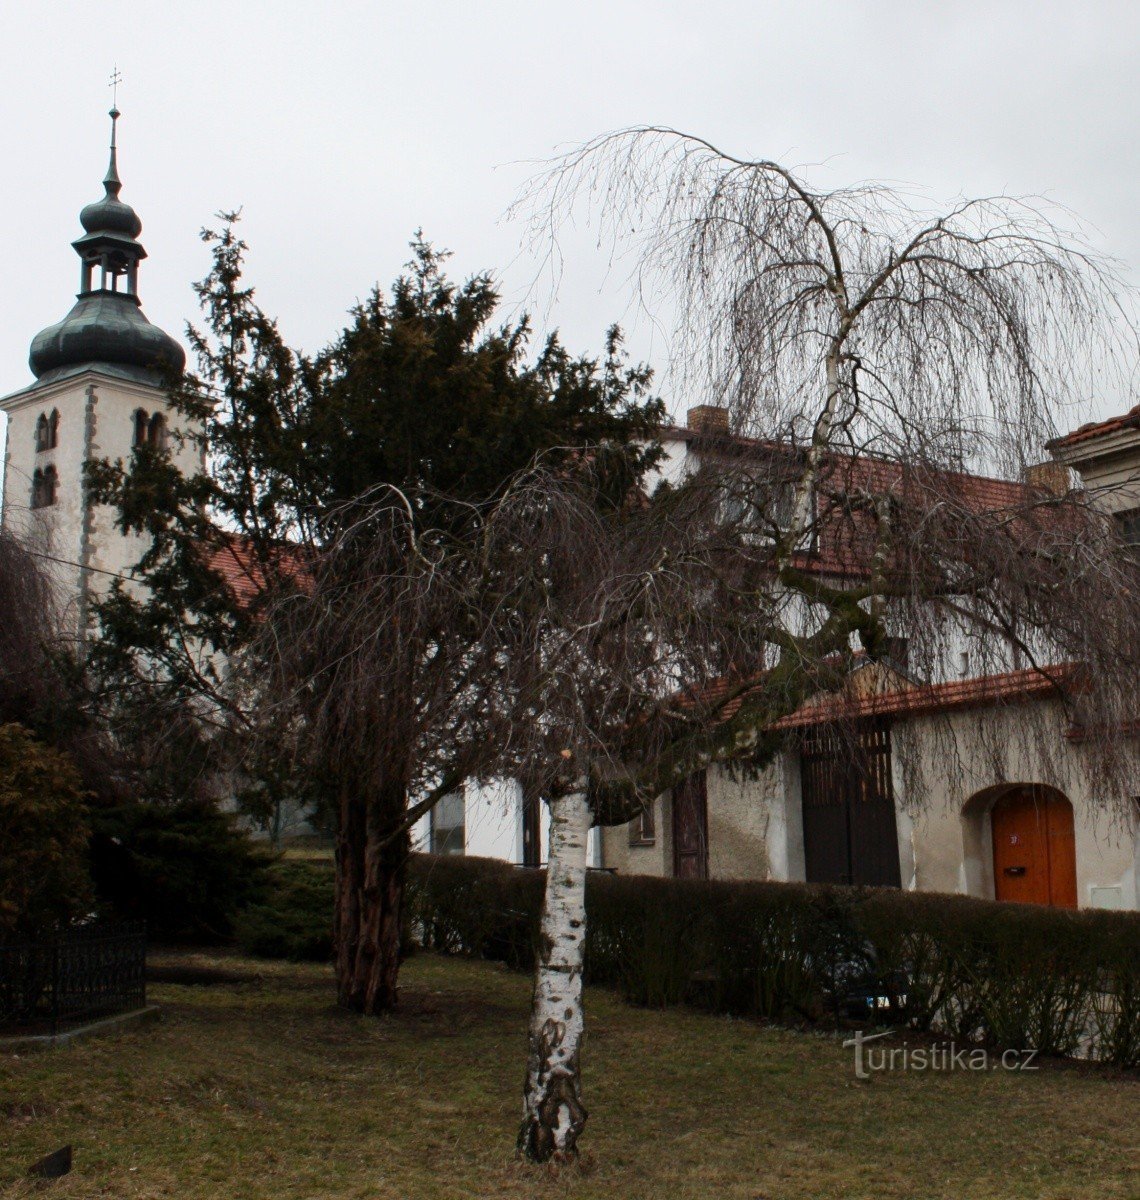 Olbramovice - Municipal house and Hubert's house